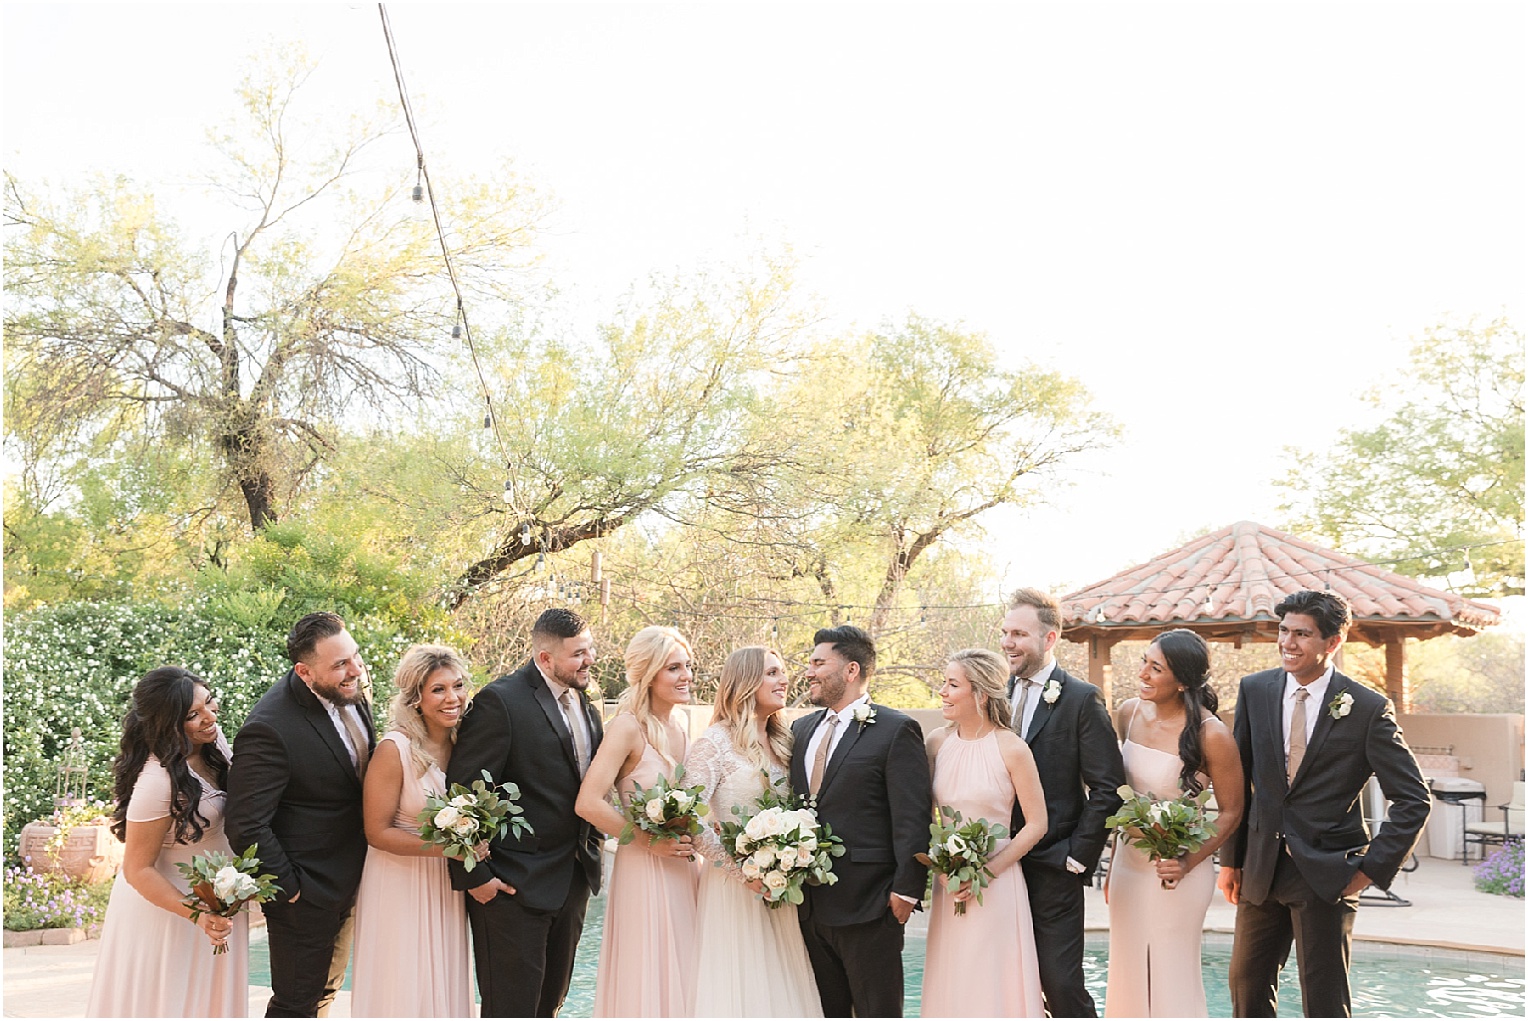 Intimate Backyard Wedding Tucson, AZ Chanel + Eddie bridal party portraits